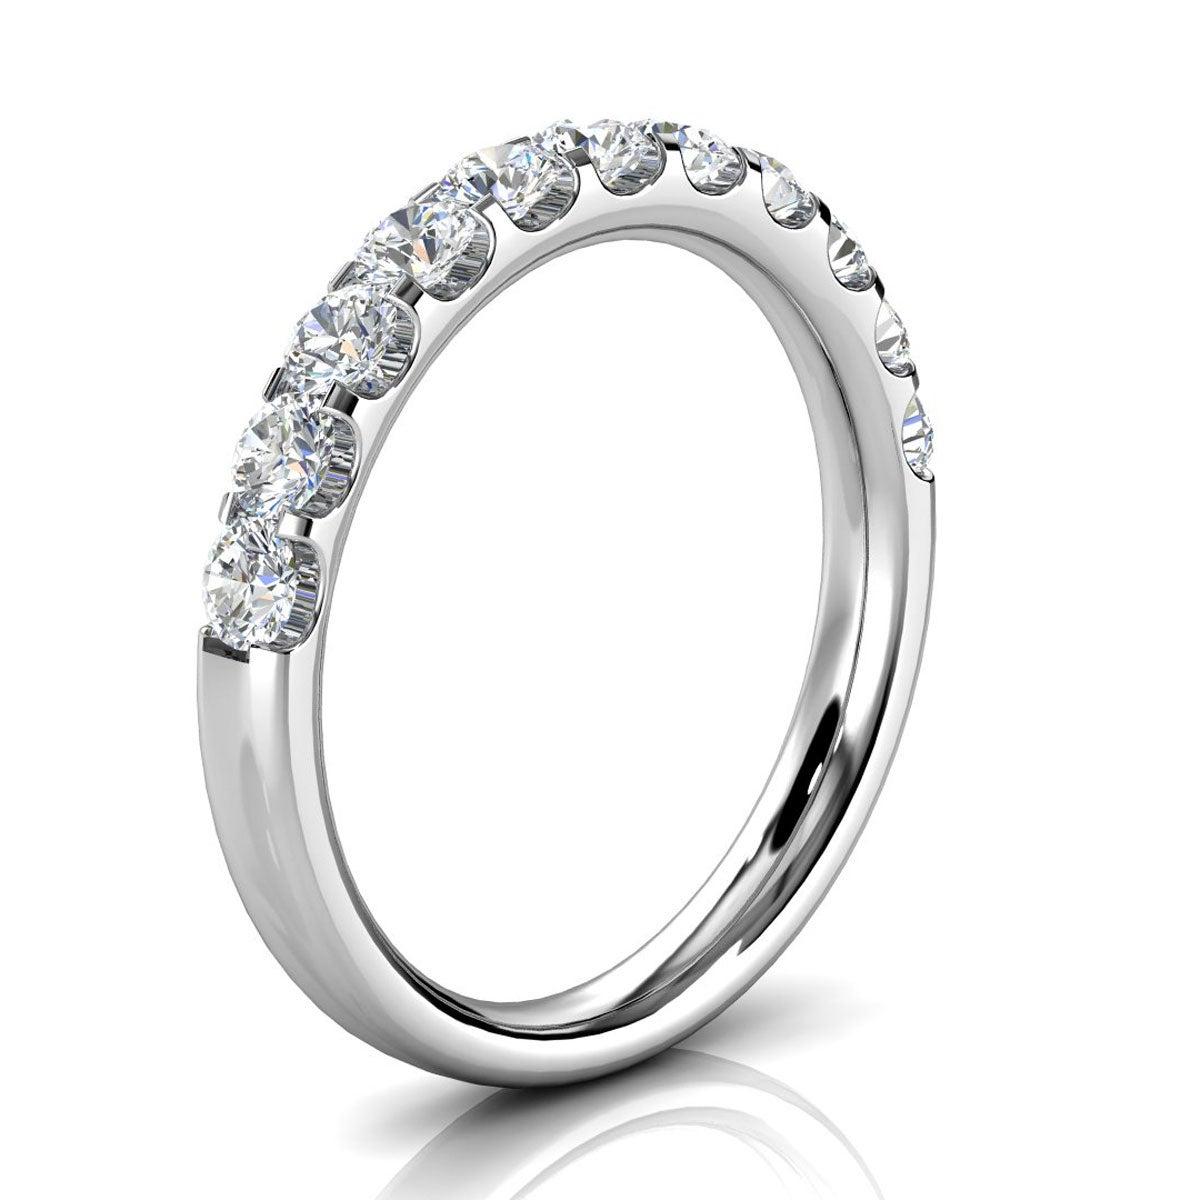 For Sale:  14k White Gold Valerie Micro-Prong Diamond Ring '1 Ct. Tw' 2